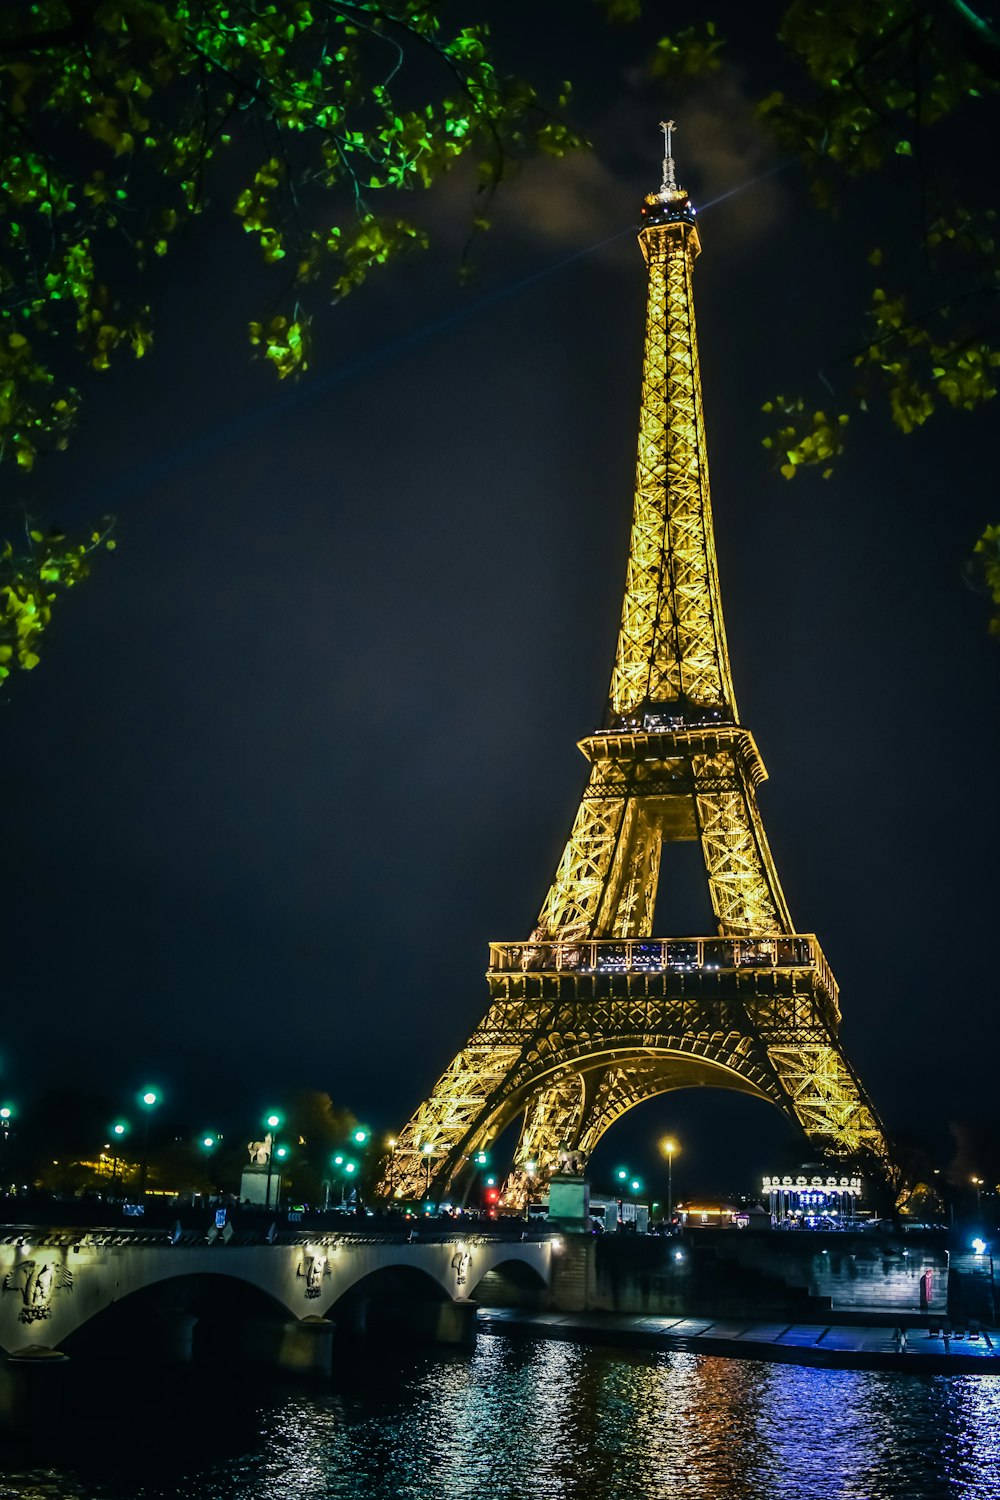 Eiffel Tower Paris France Pictures Download Free Images On Unsplash